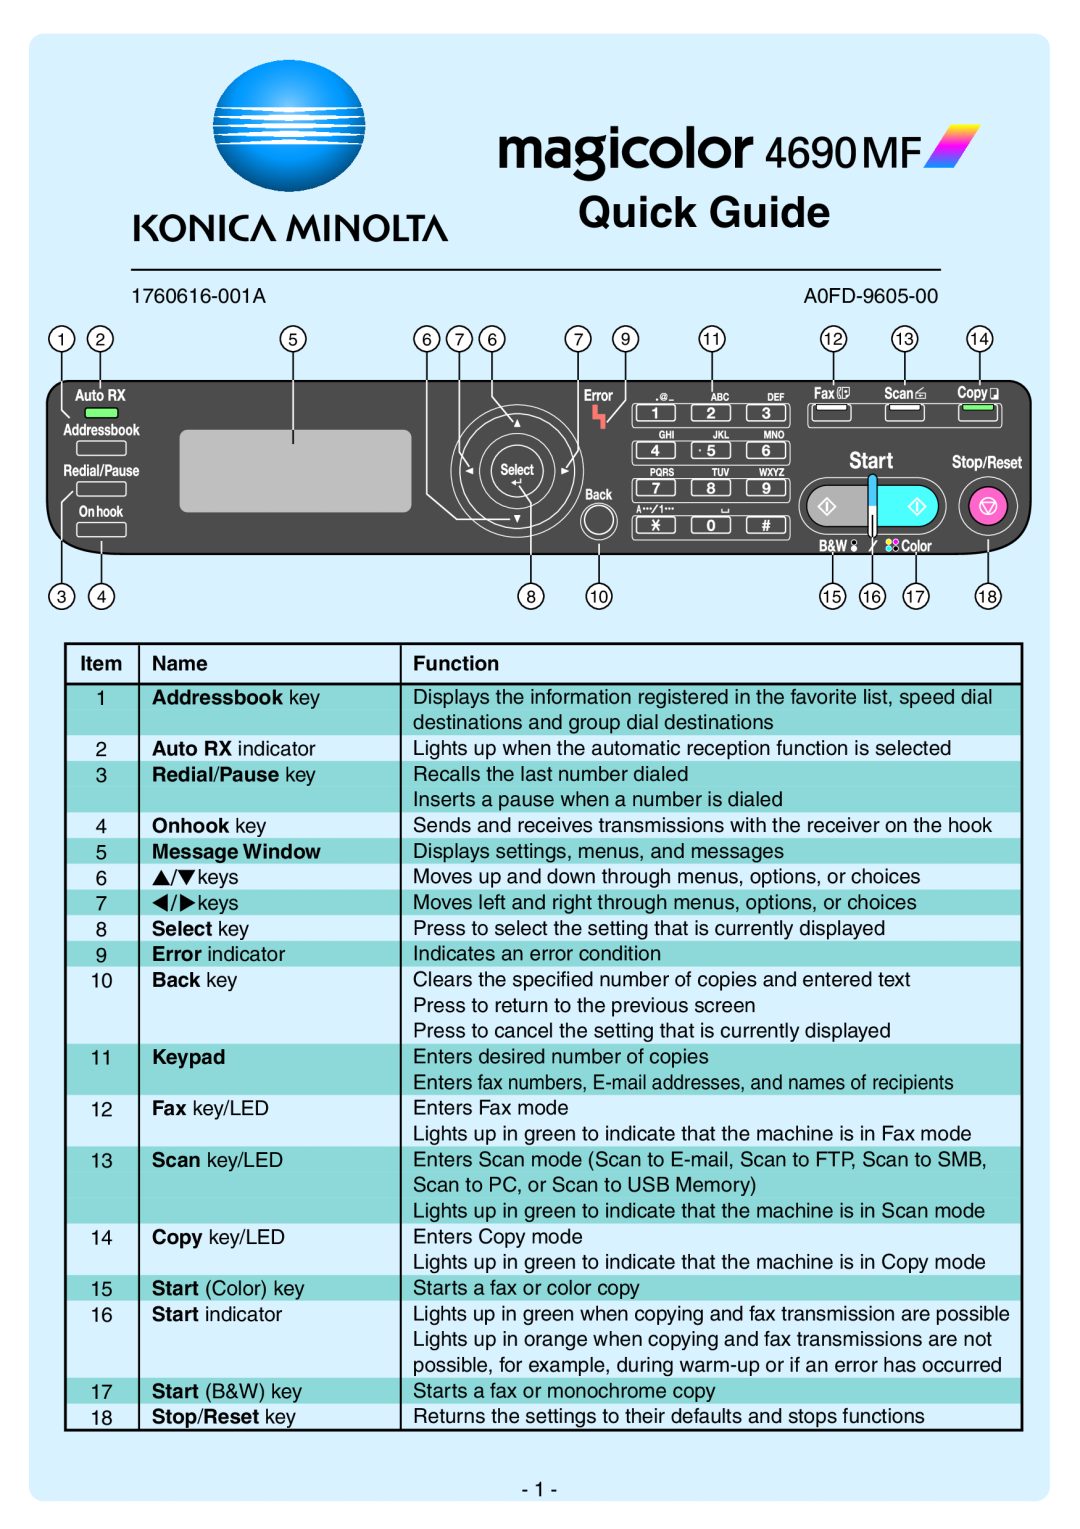 Konica Minolta 4690MF manual Quick Guide 